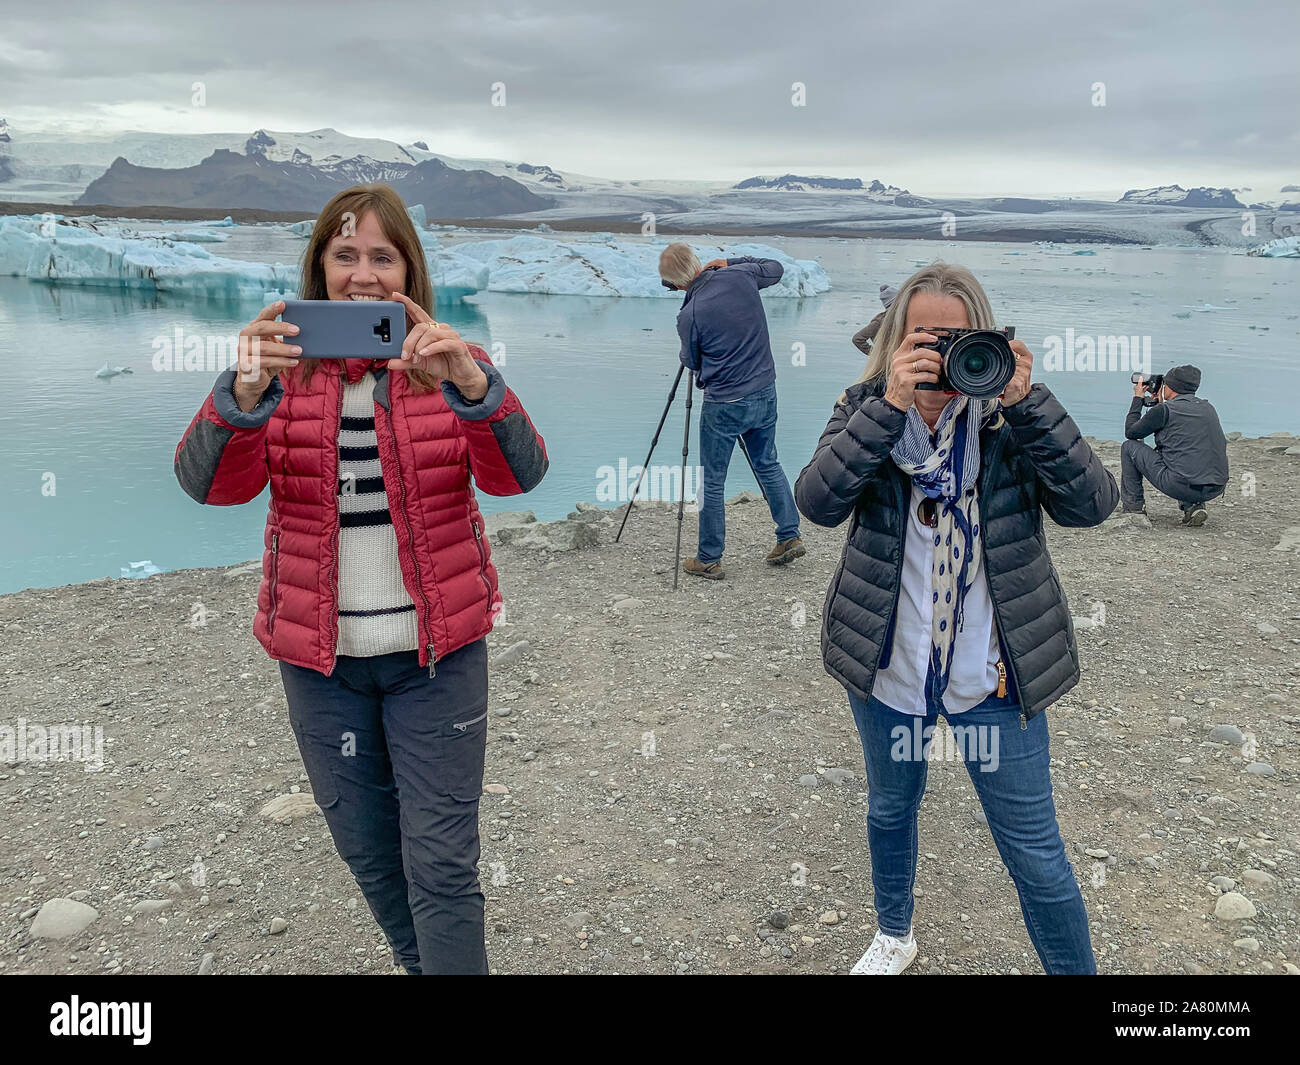 Touristen fotografieren, Gletscherlagune Jokulsarlon, Vatnajökull National Park, Island, einem UNESCO-Weltkulturerbe. Stockfoto